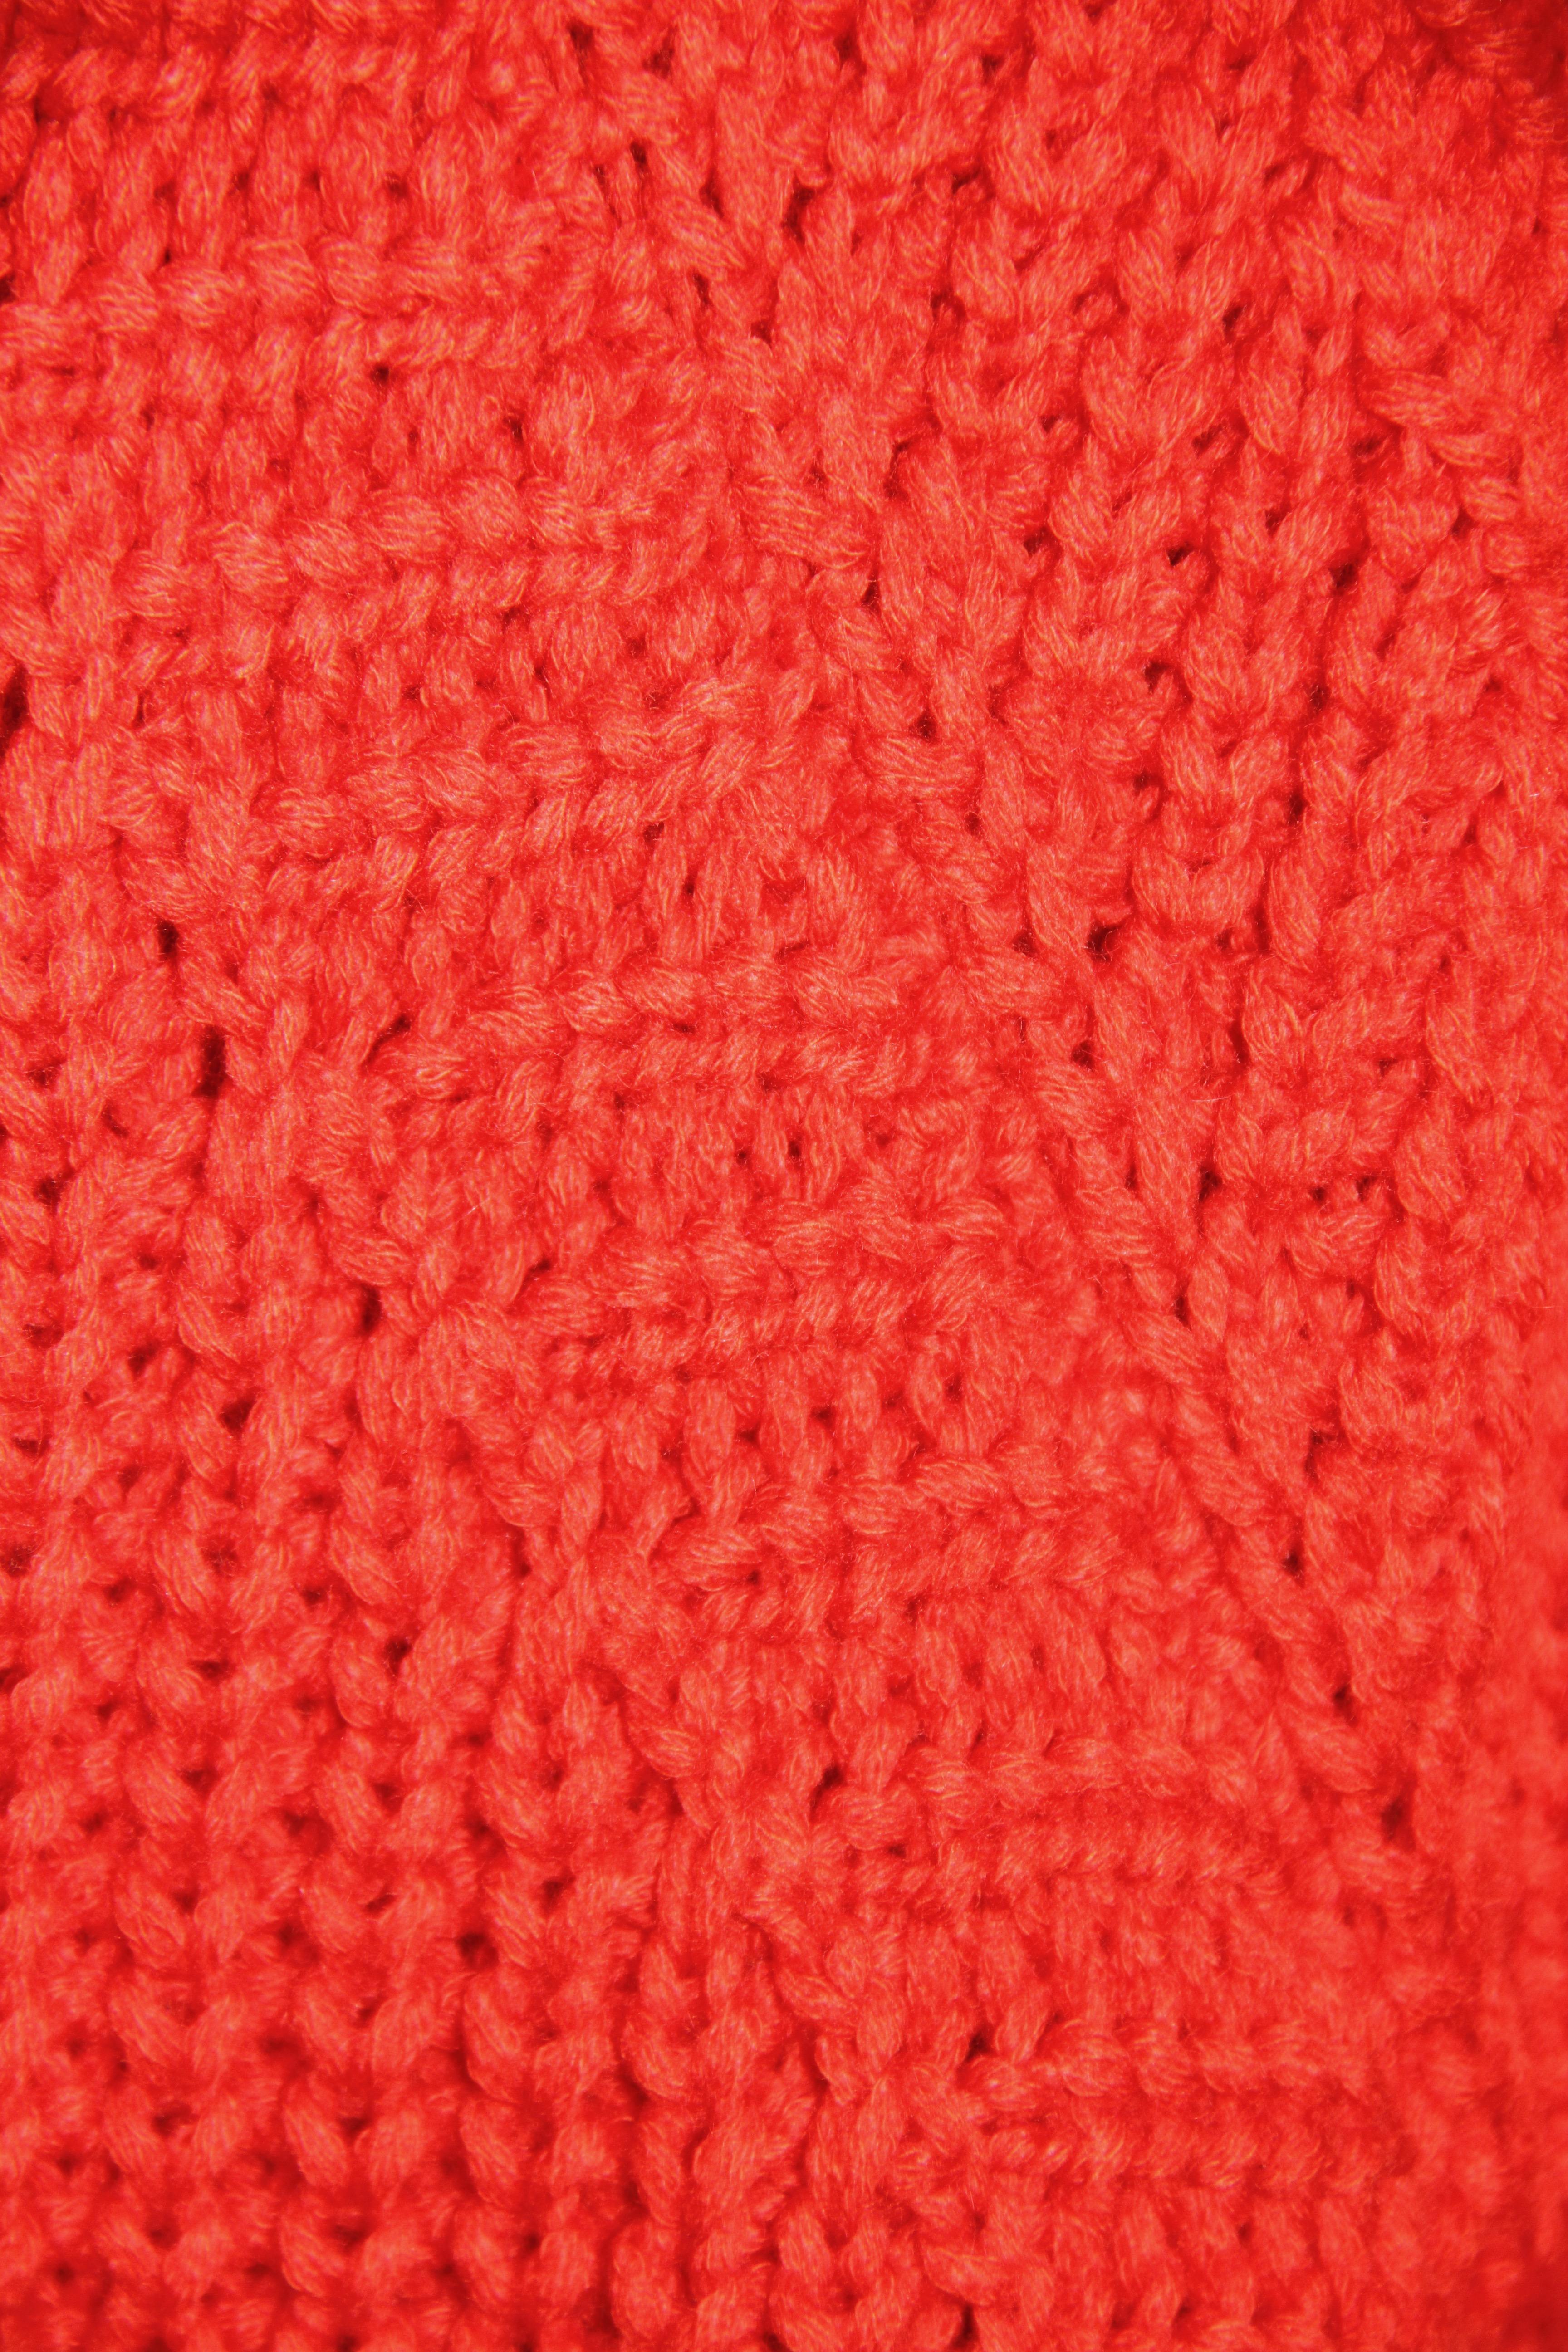 Red Hermes orange cashmere cotton mix knit dress